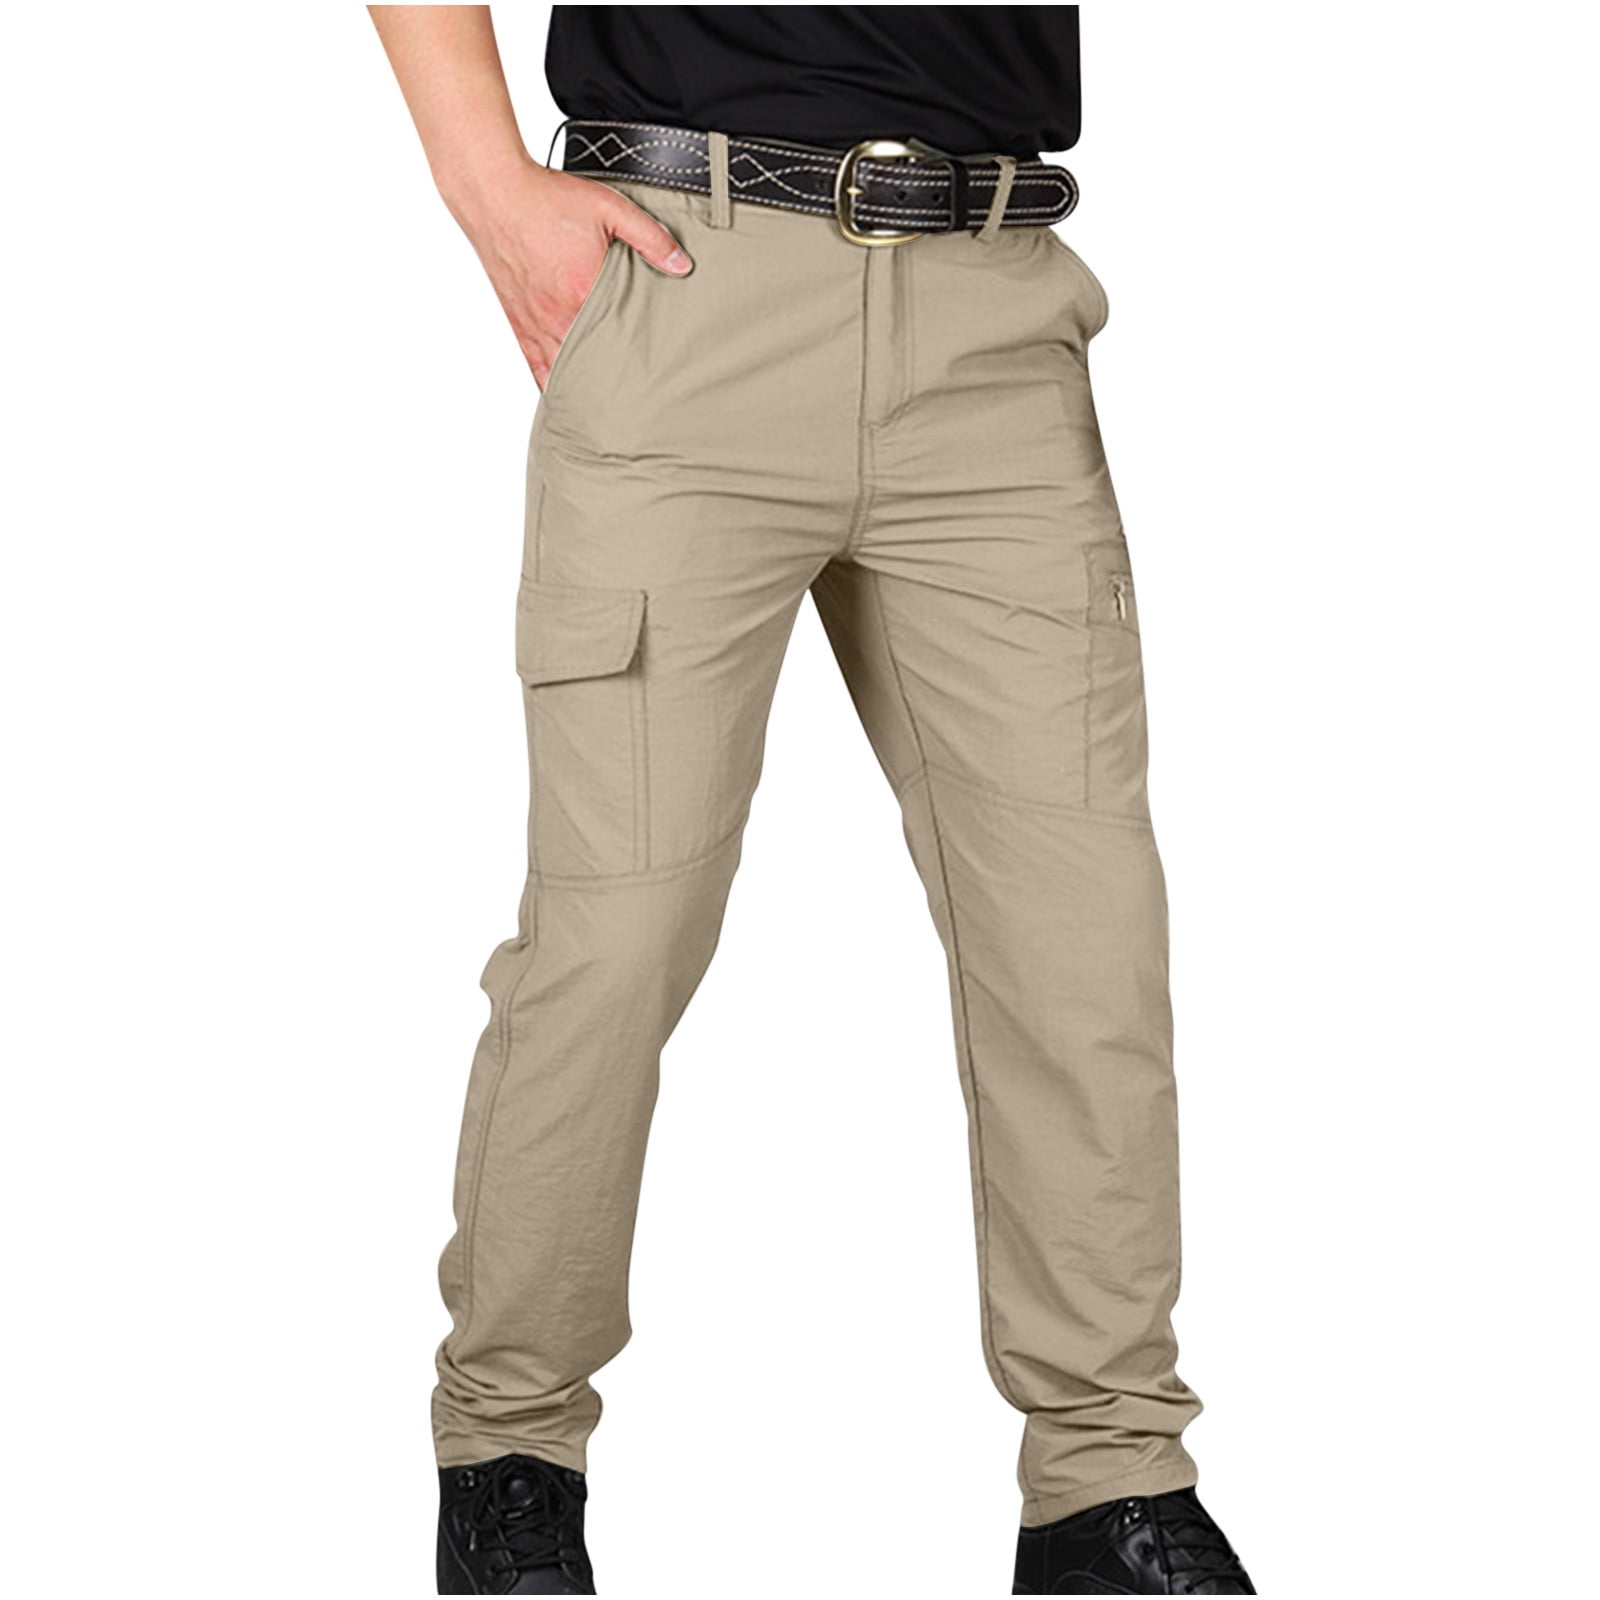 Stamzod Cargo Pants For Men Multiple Pockets Wear-Resistanting Hiking ...